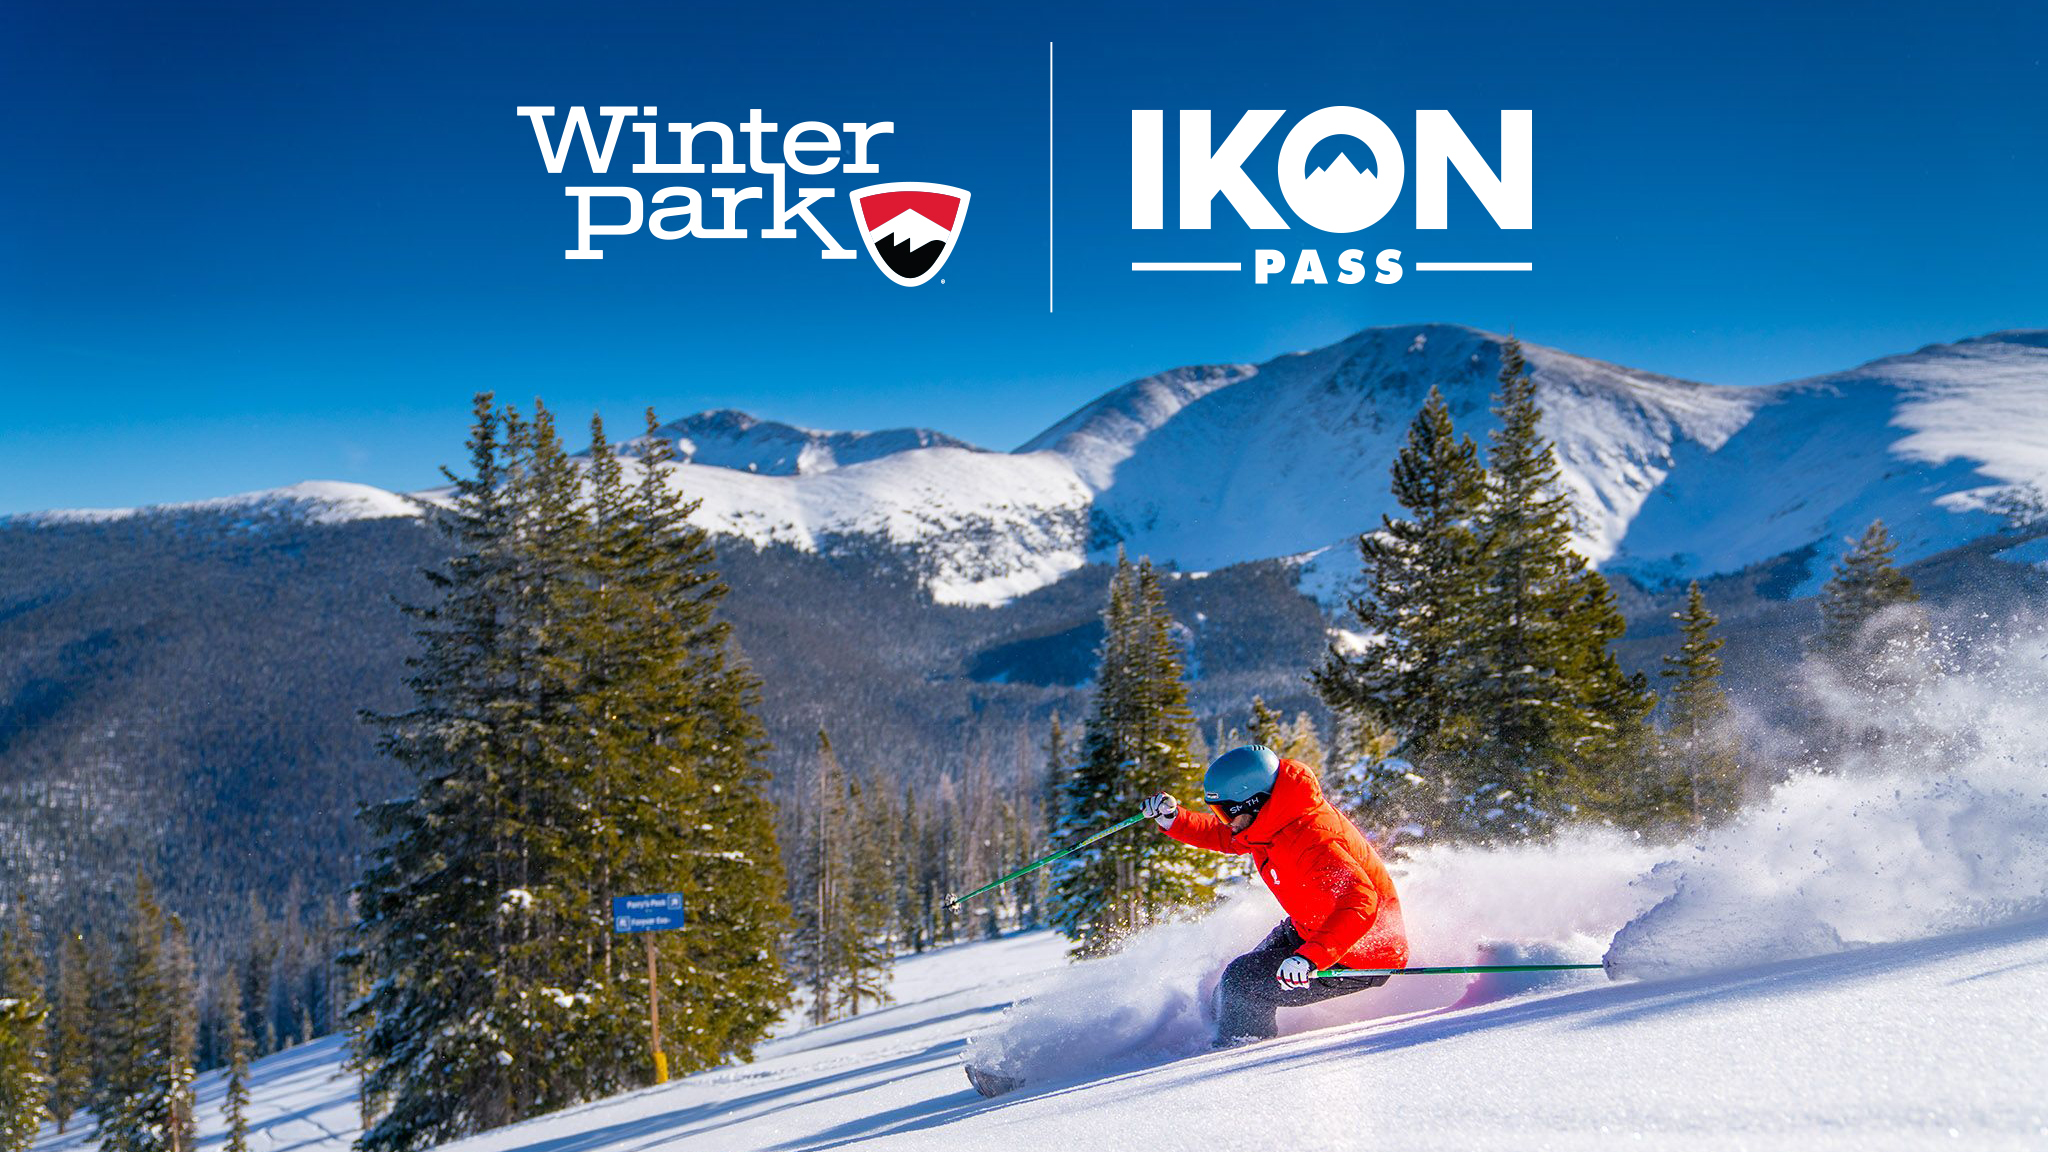 Skier rides fresh powder at winter park resort